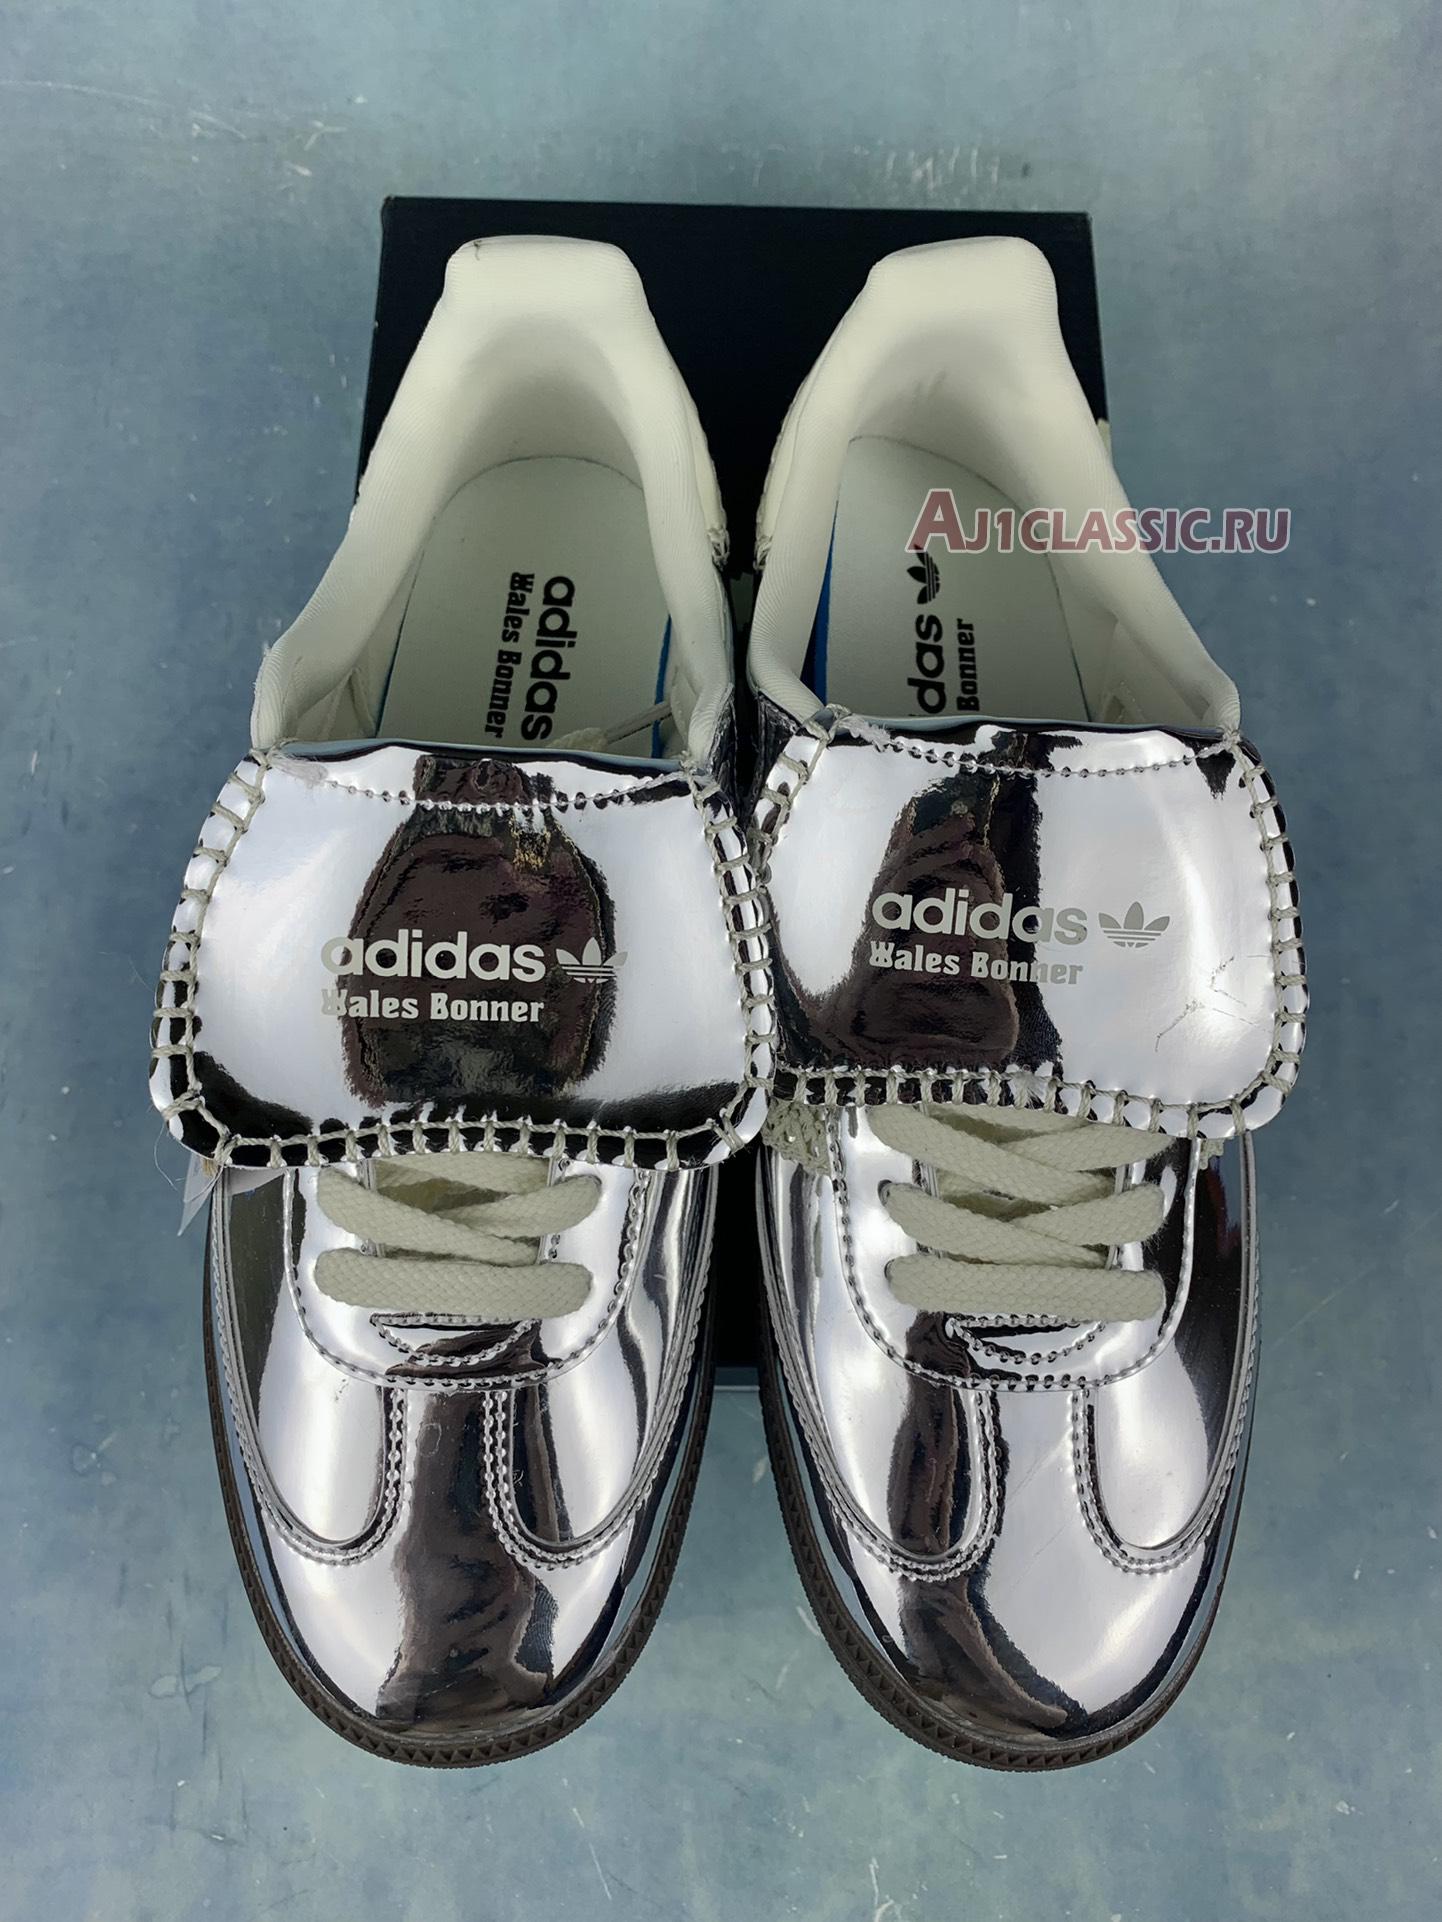 Wales Bonner x Adidas Samba "Silver Metallic" IG8181